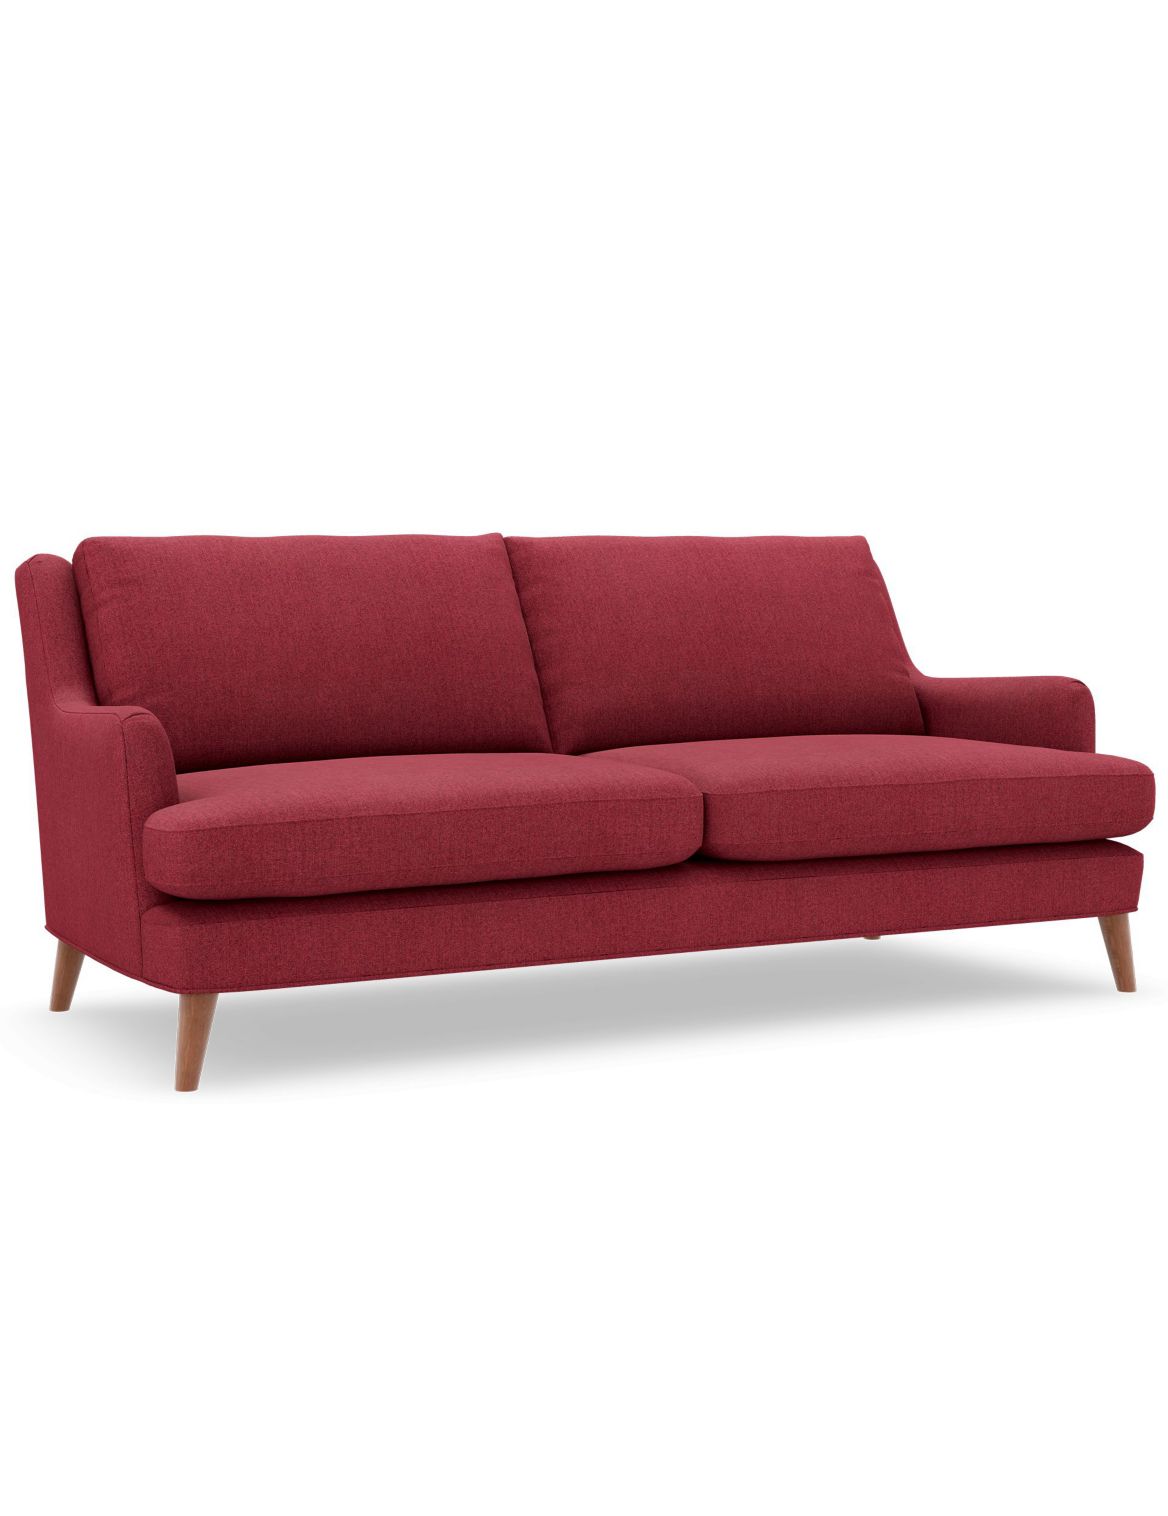 Ashton Large Sofa red